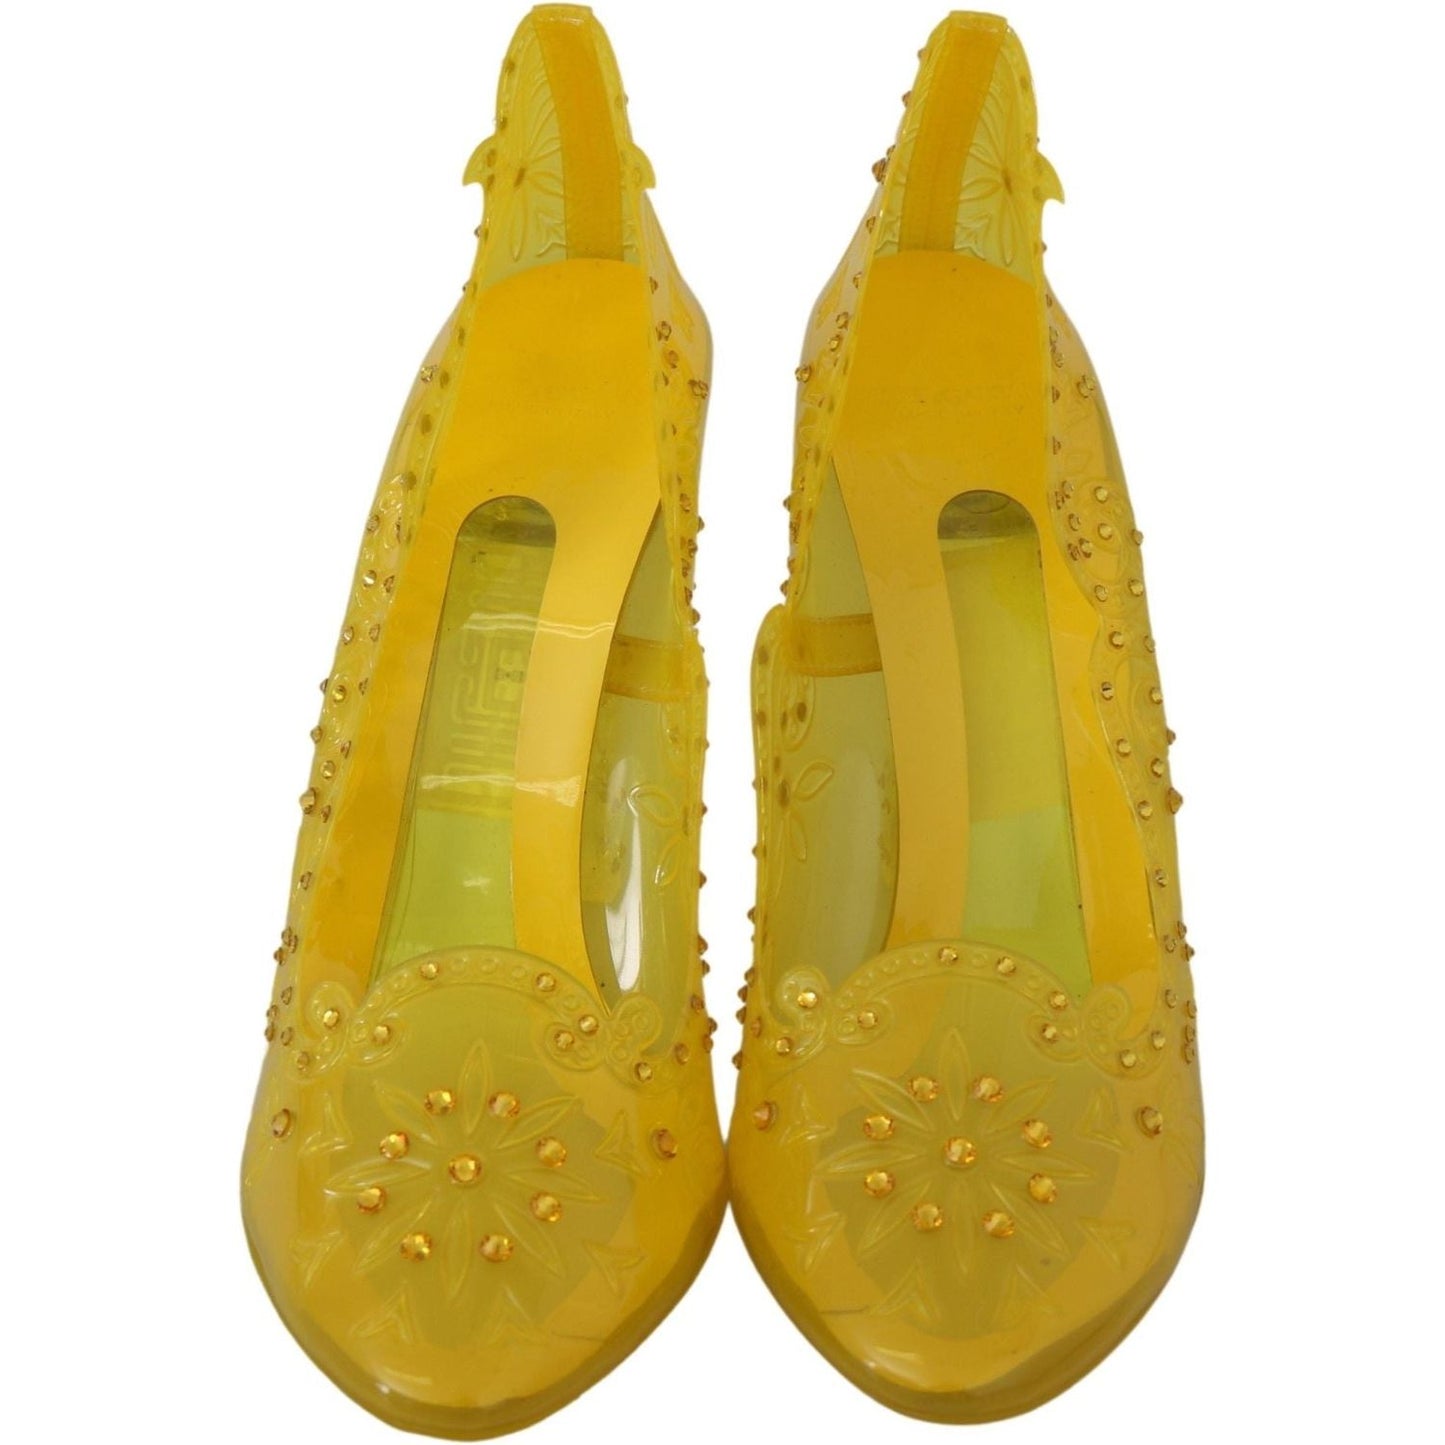 Dolce & Gabbana Enchanting Cinderella Crystal Pumps yellow-floral-crystal-cinderella-heels-shoes IMG_8111-1-d58bccf9-090.jpg